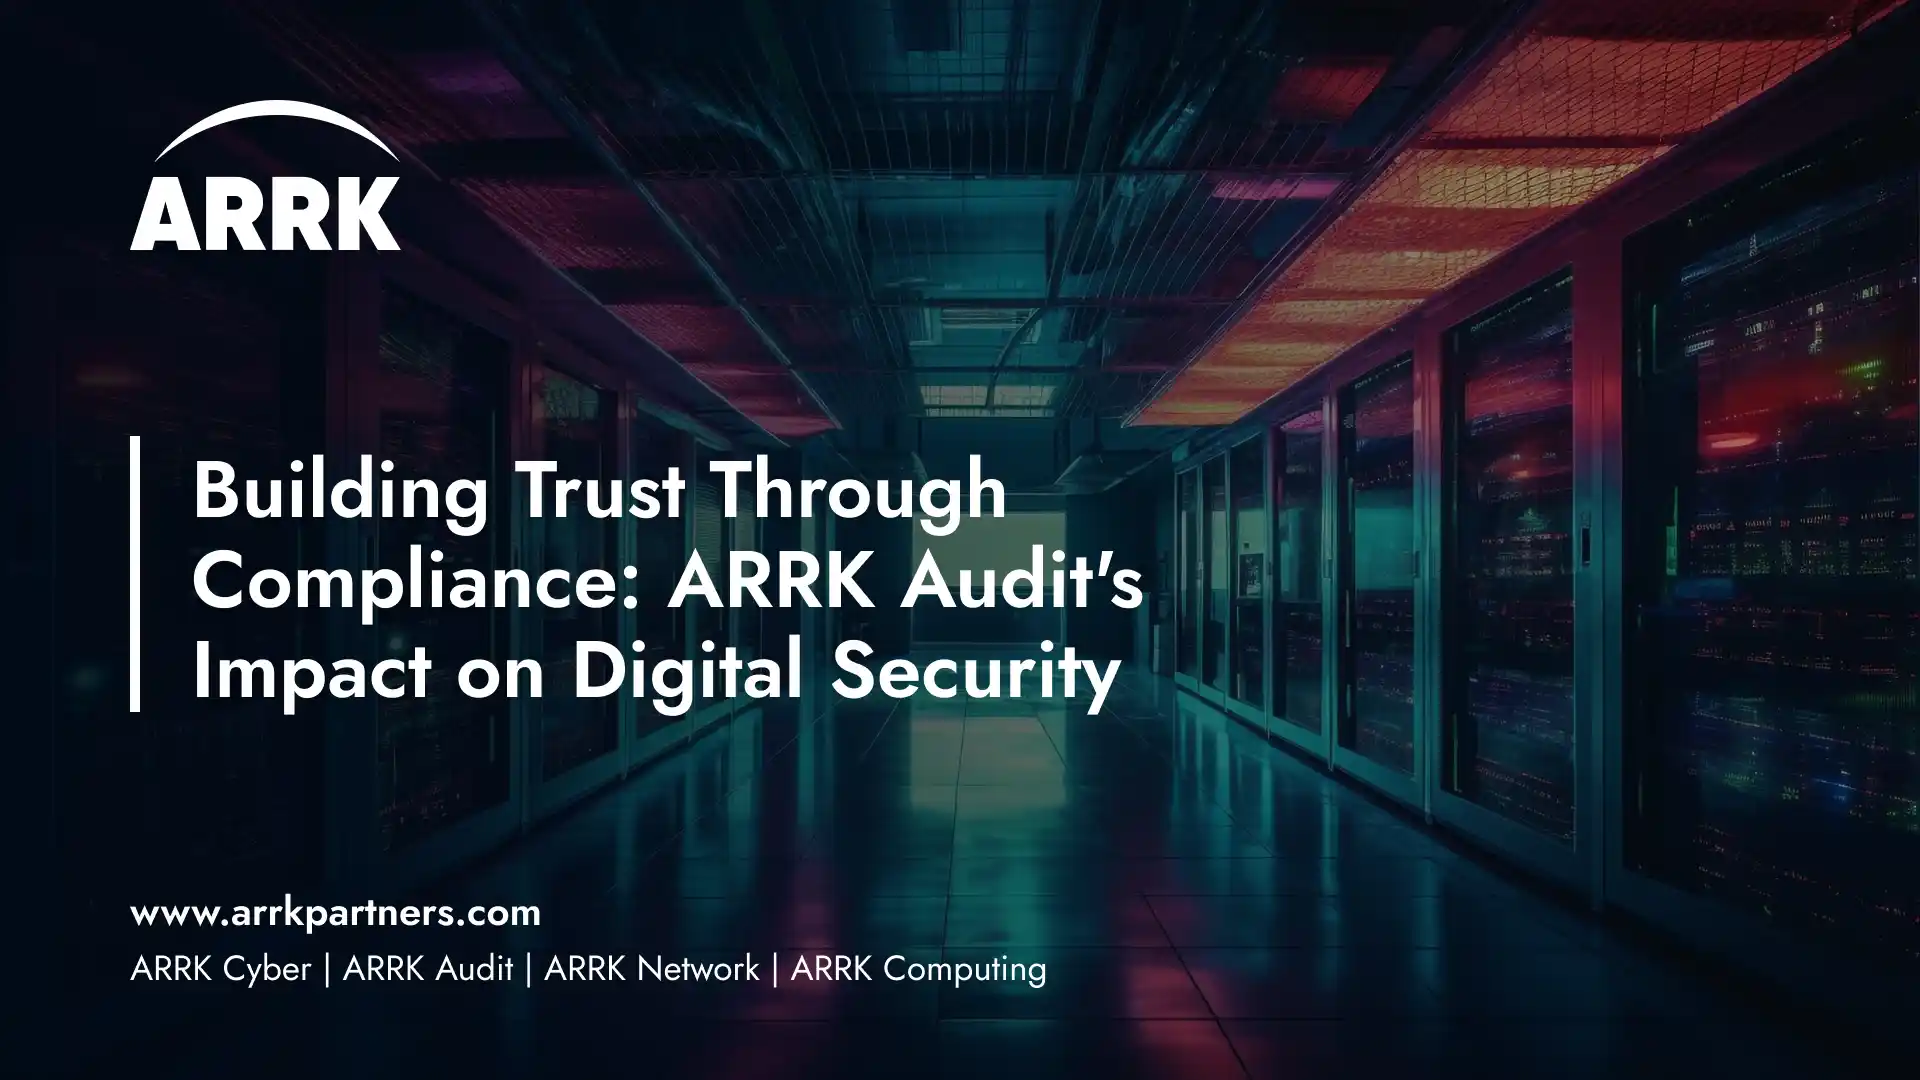 ARRK Audit's Impact on Digital Security